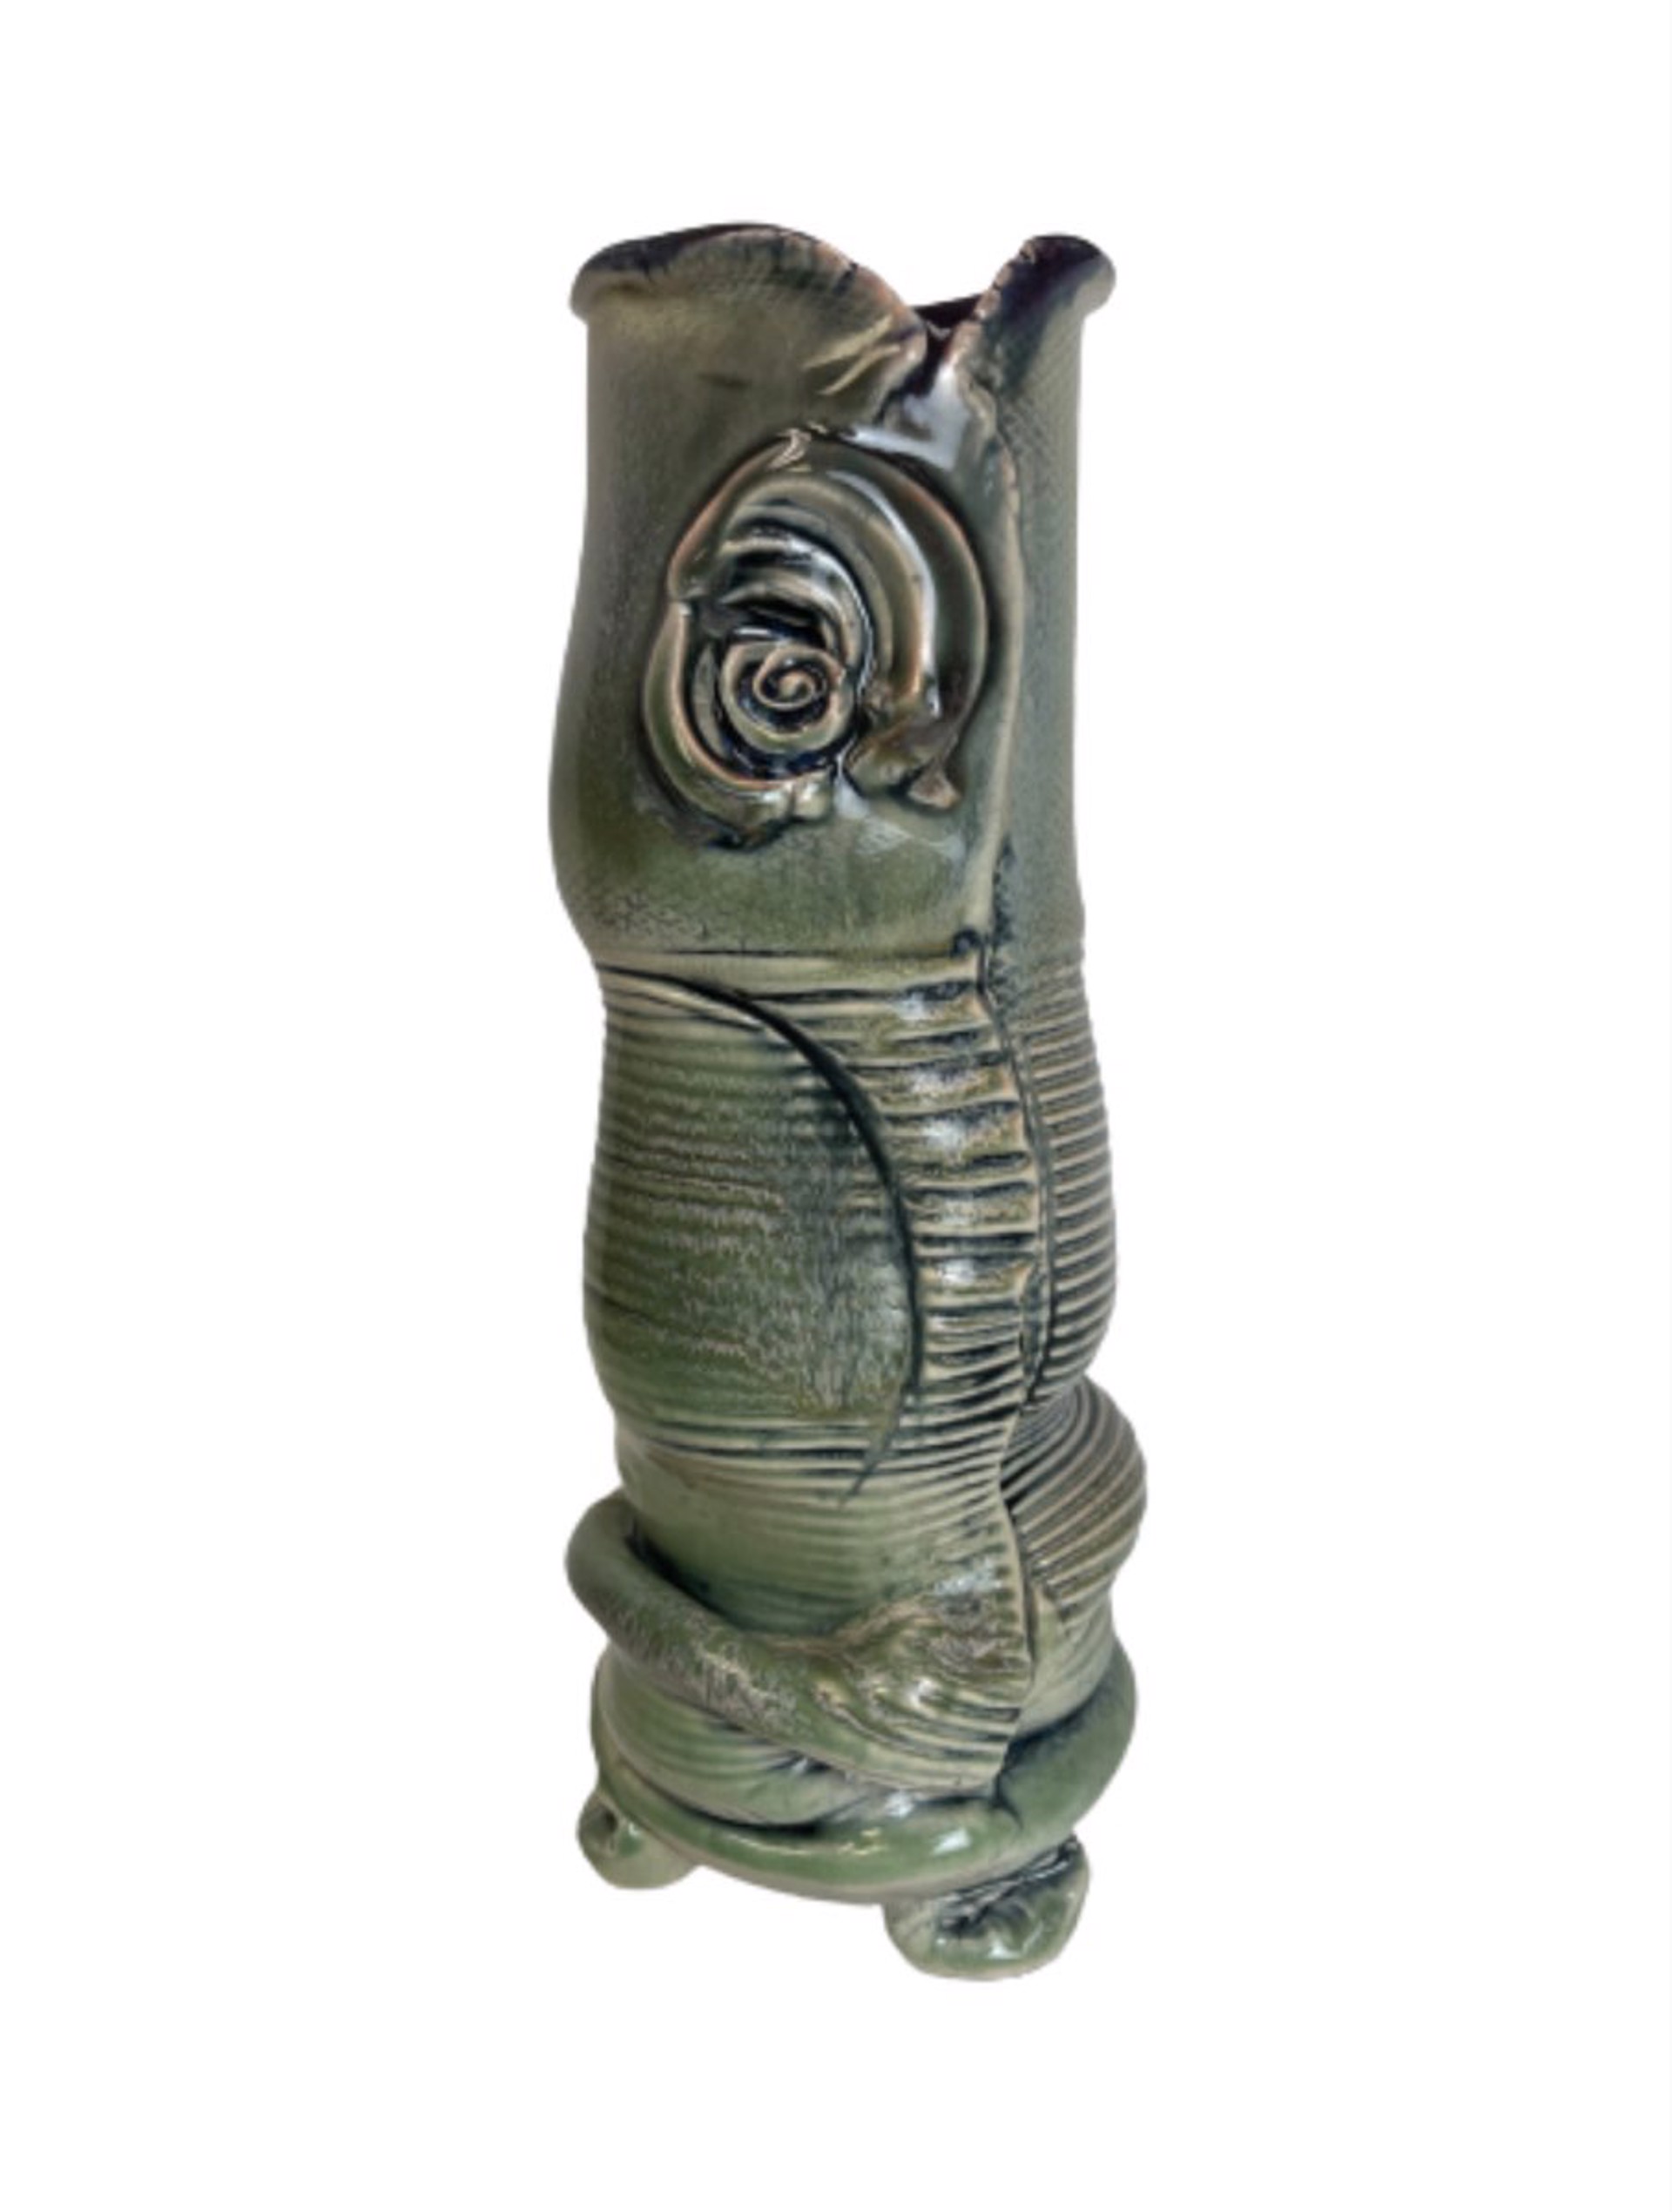 Tall Vase with Emblem by Sandy Blain